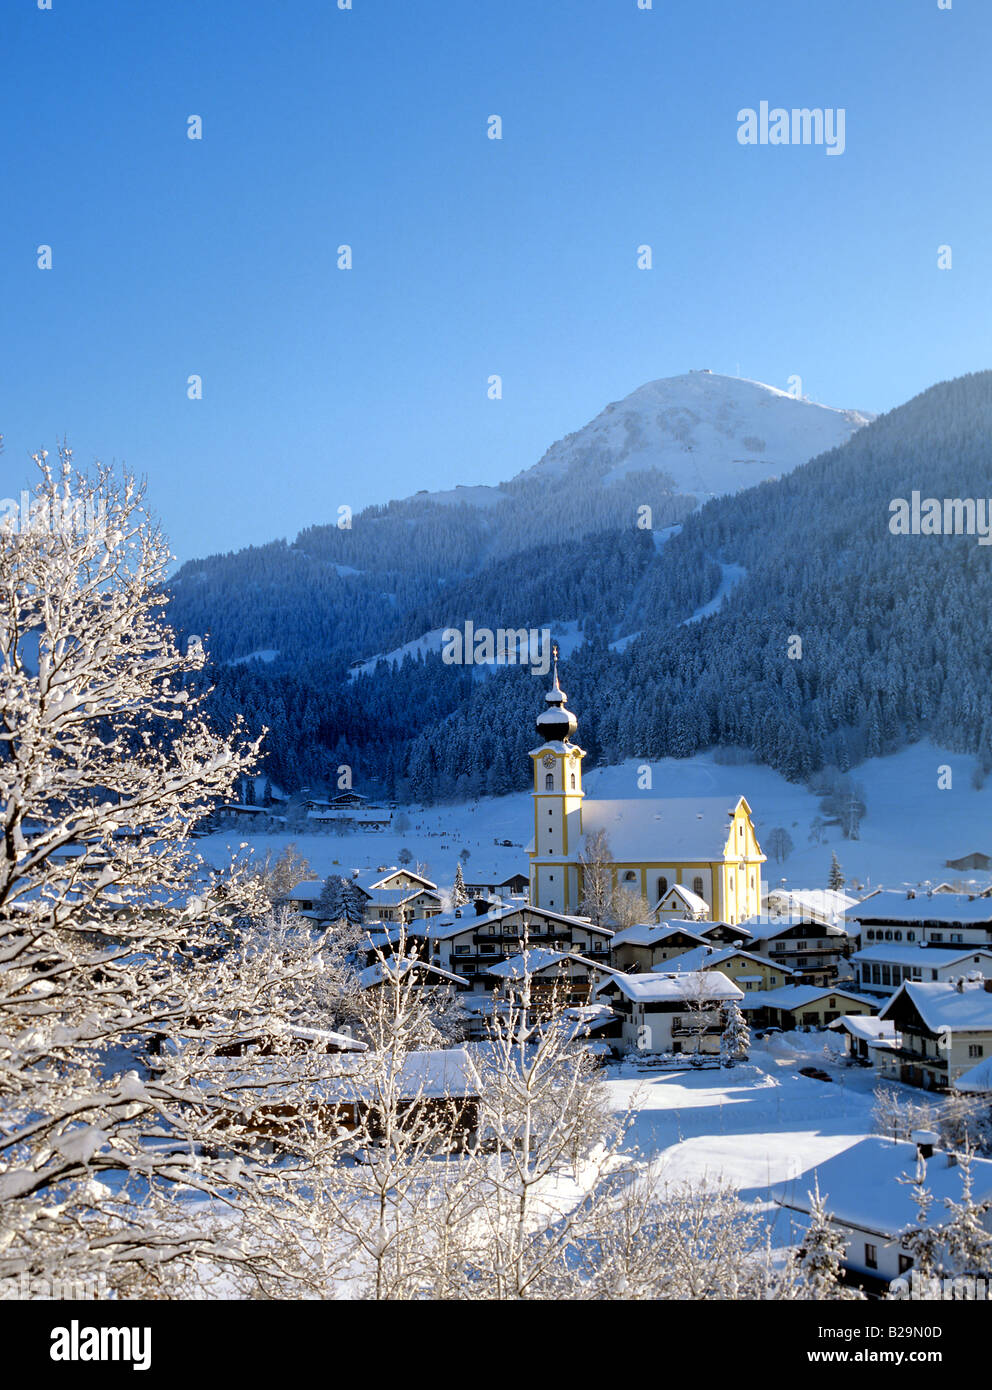 Soll Tirol Austria Ref WP STRANGE 3744 COMPULSORY CREDIT World Pictures Photoshot Stock Photo